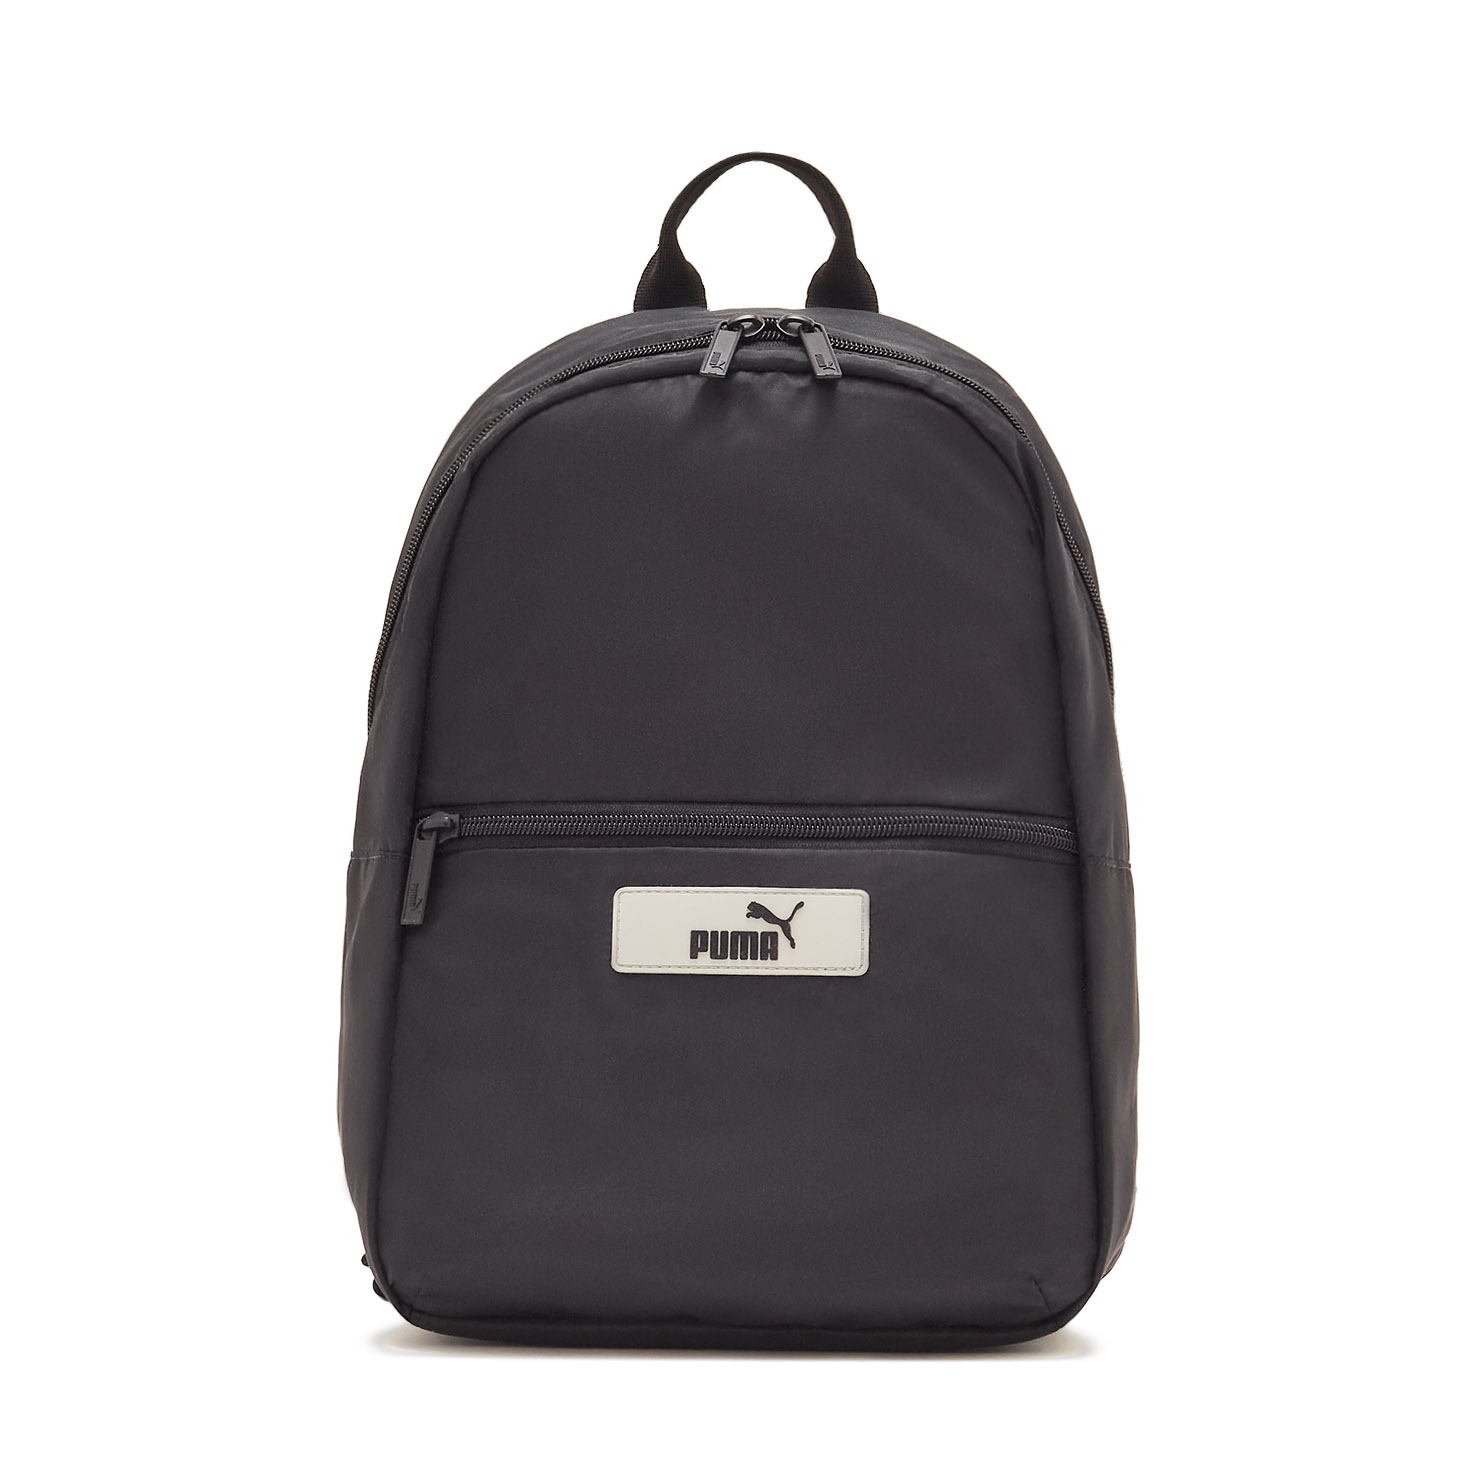 Pop Backpack PUMA, размер Один размер, цвет черный